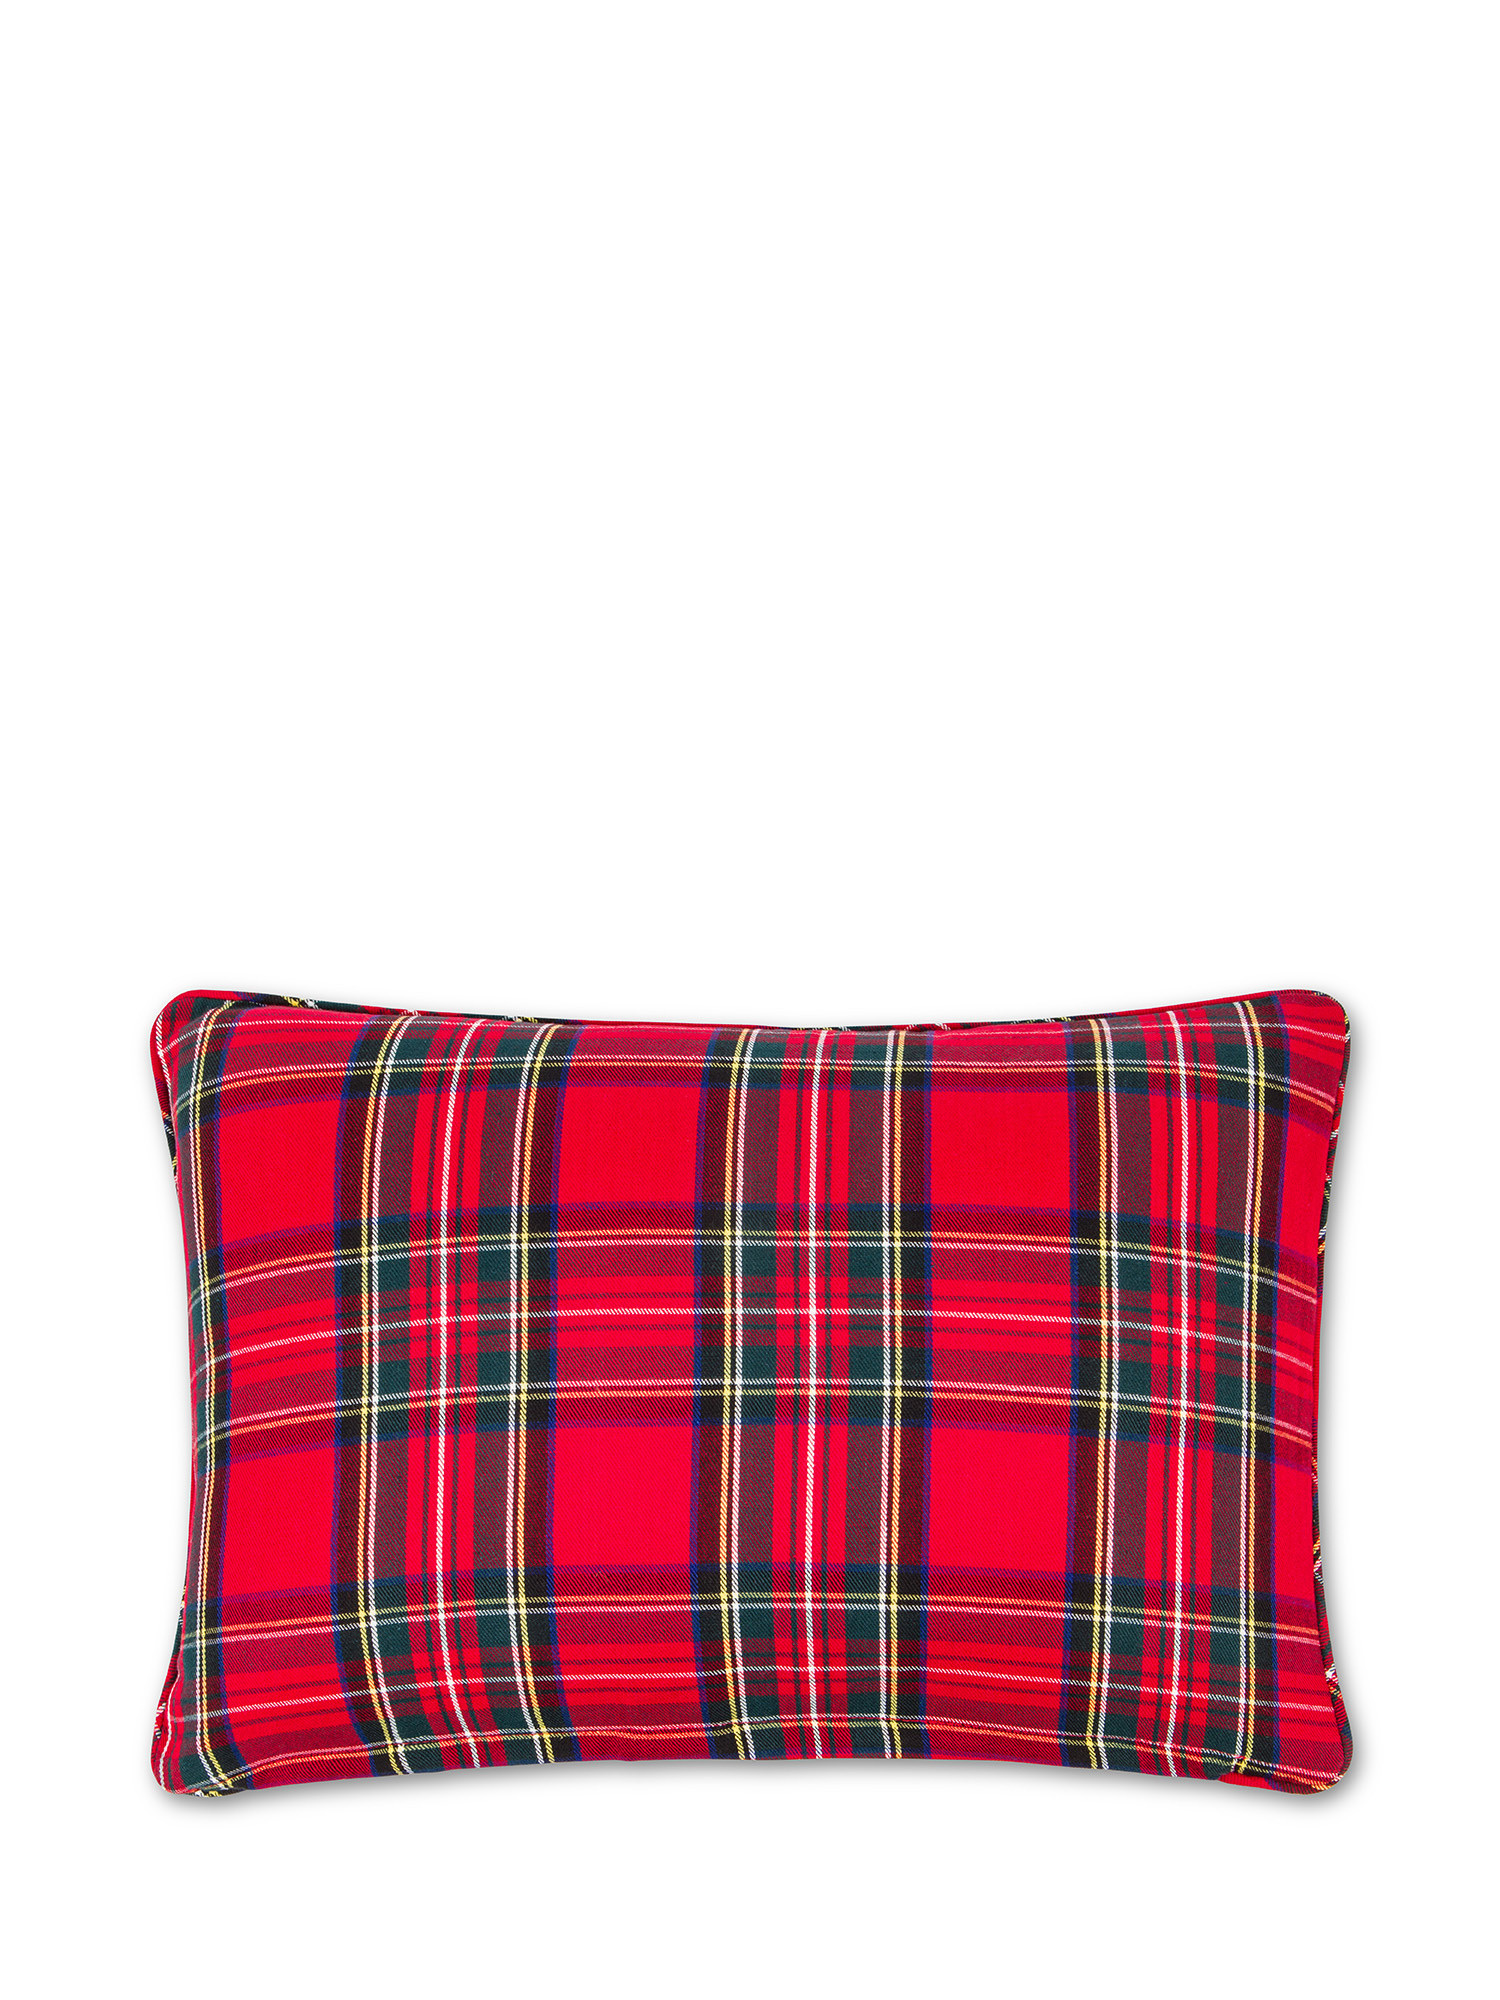 Tartan cotton cushion 35x50cm, Red, large image number 0